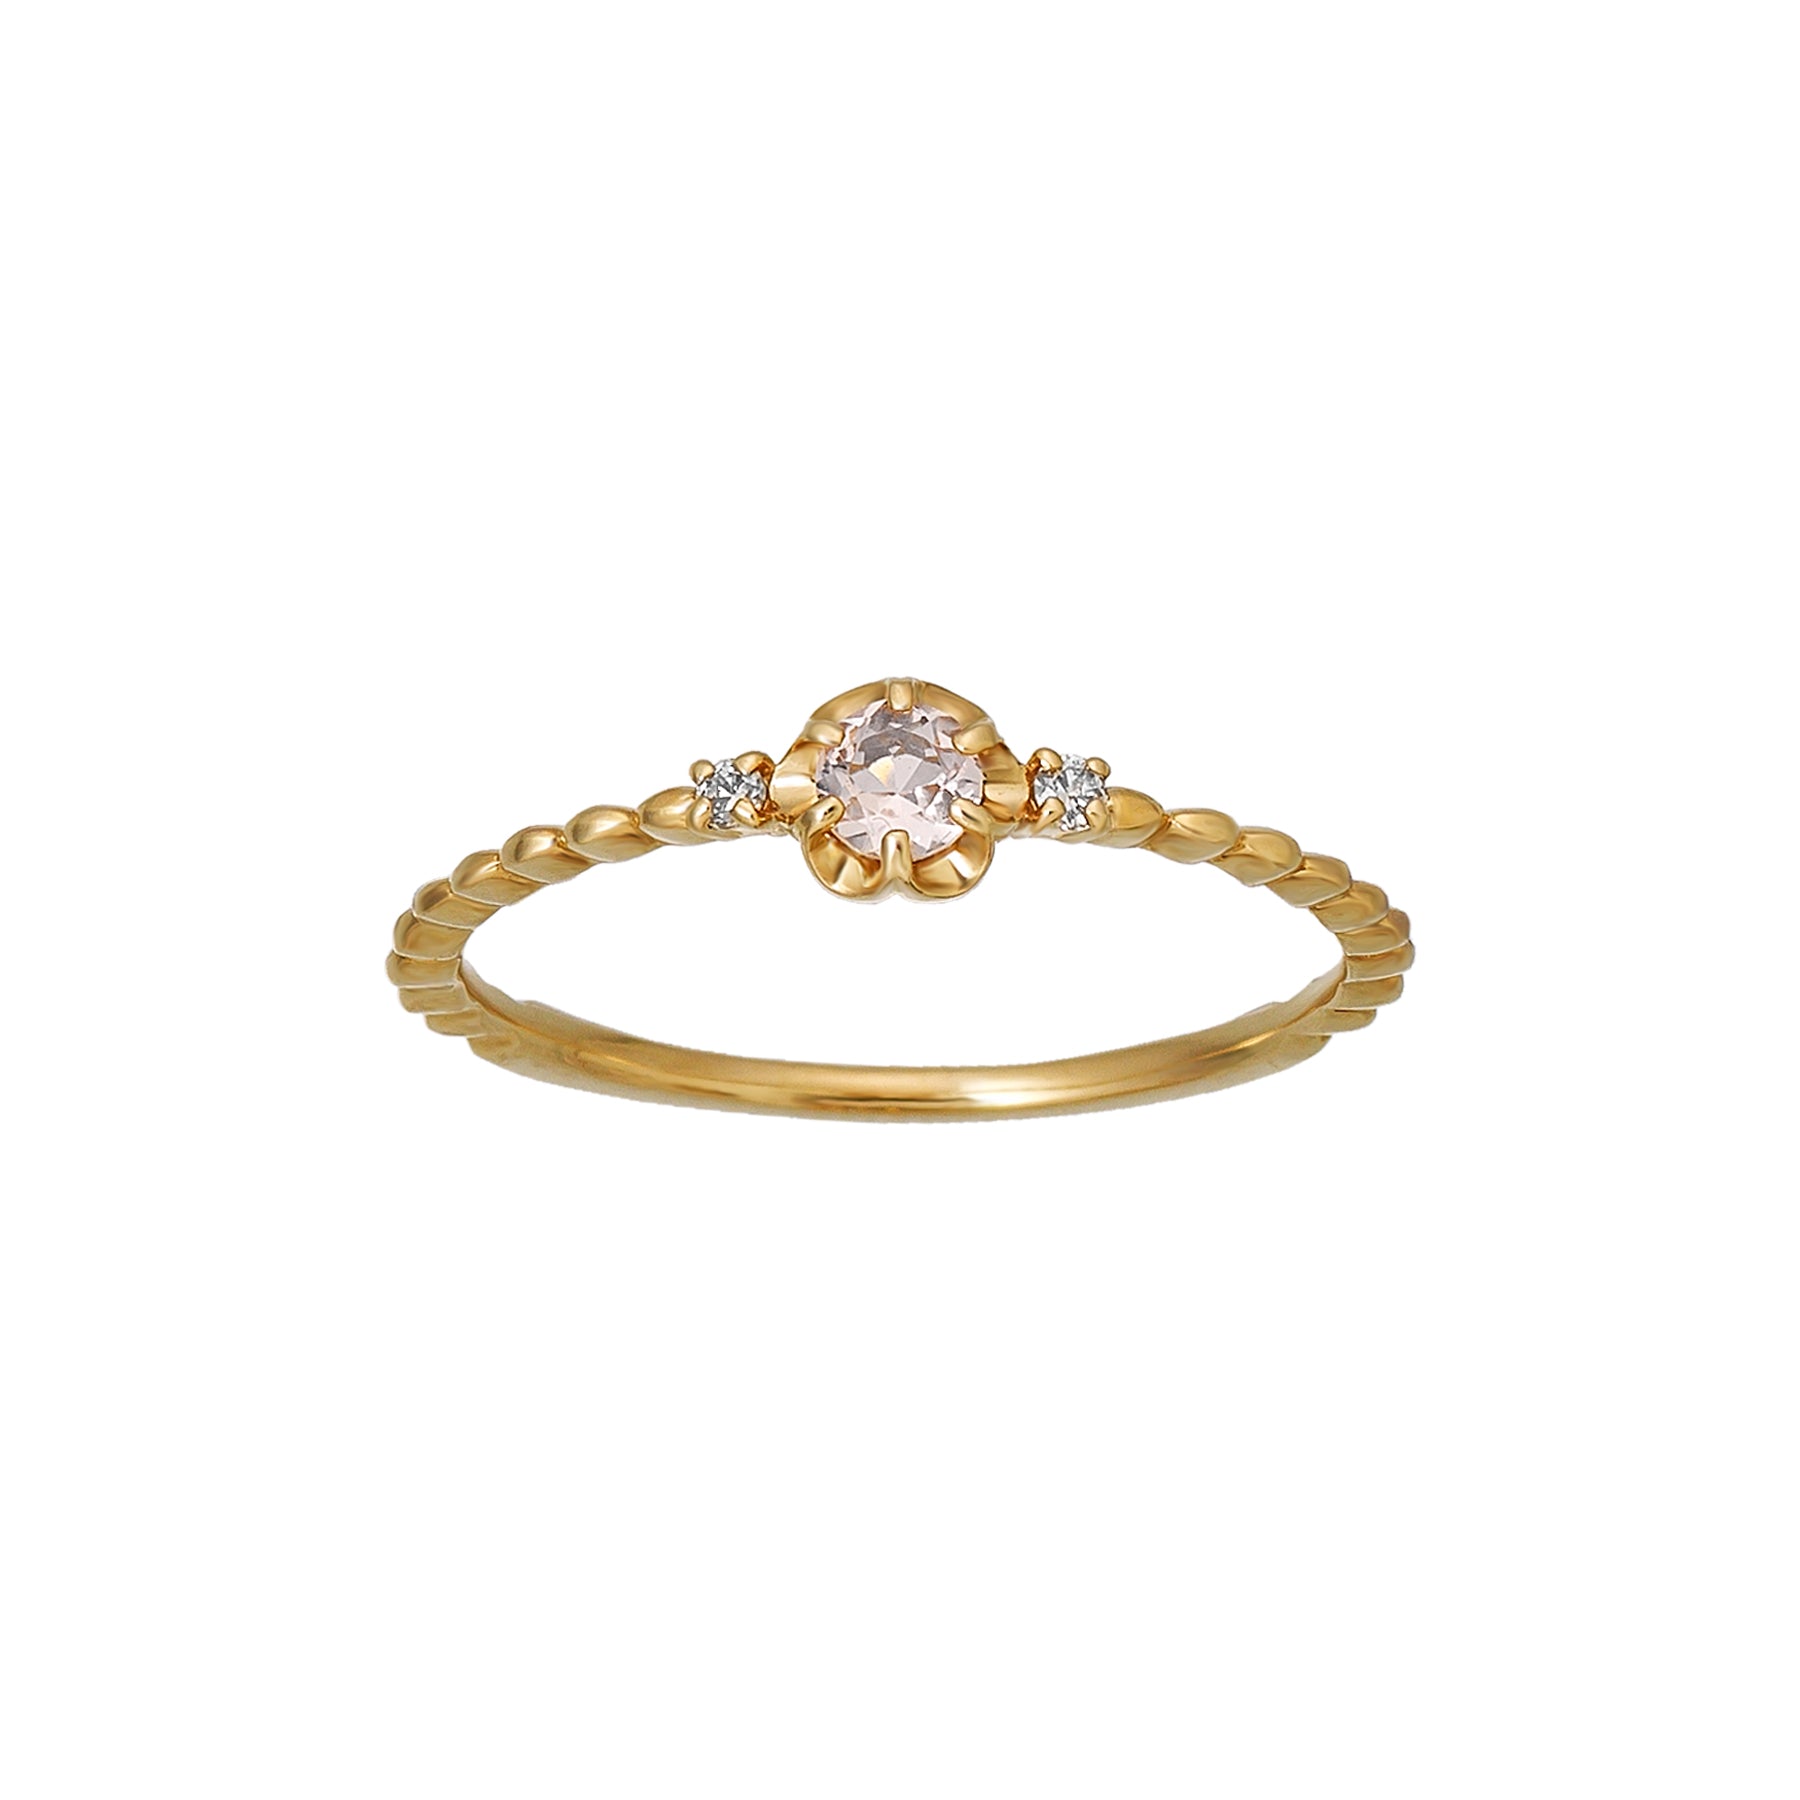 10K Yellow Gold Morganite Birthstone Ring [Full Bloom] - Product Image